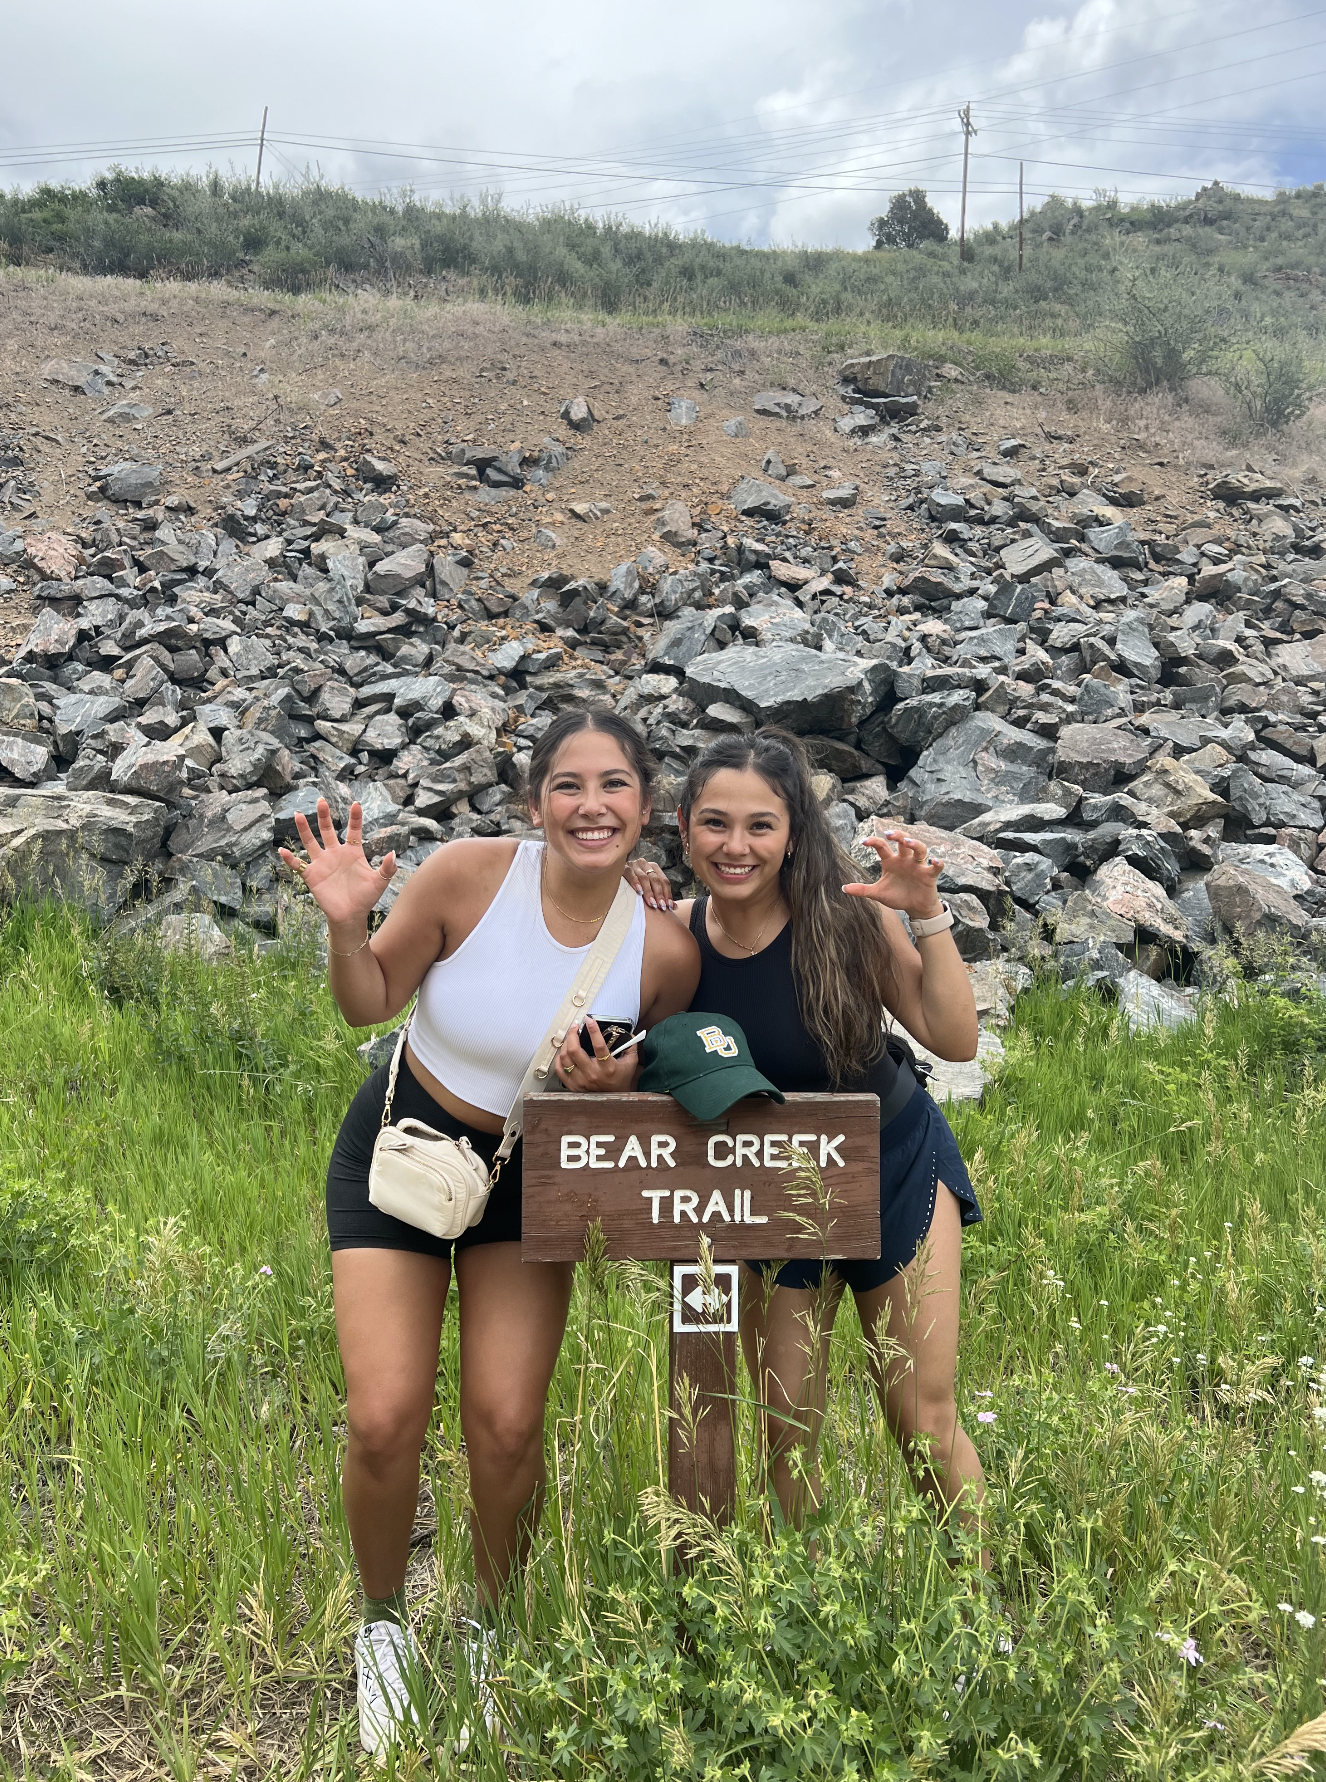 Two girls do a "sic 'em" at "Bear Creek Trail"